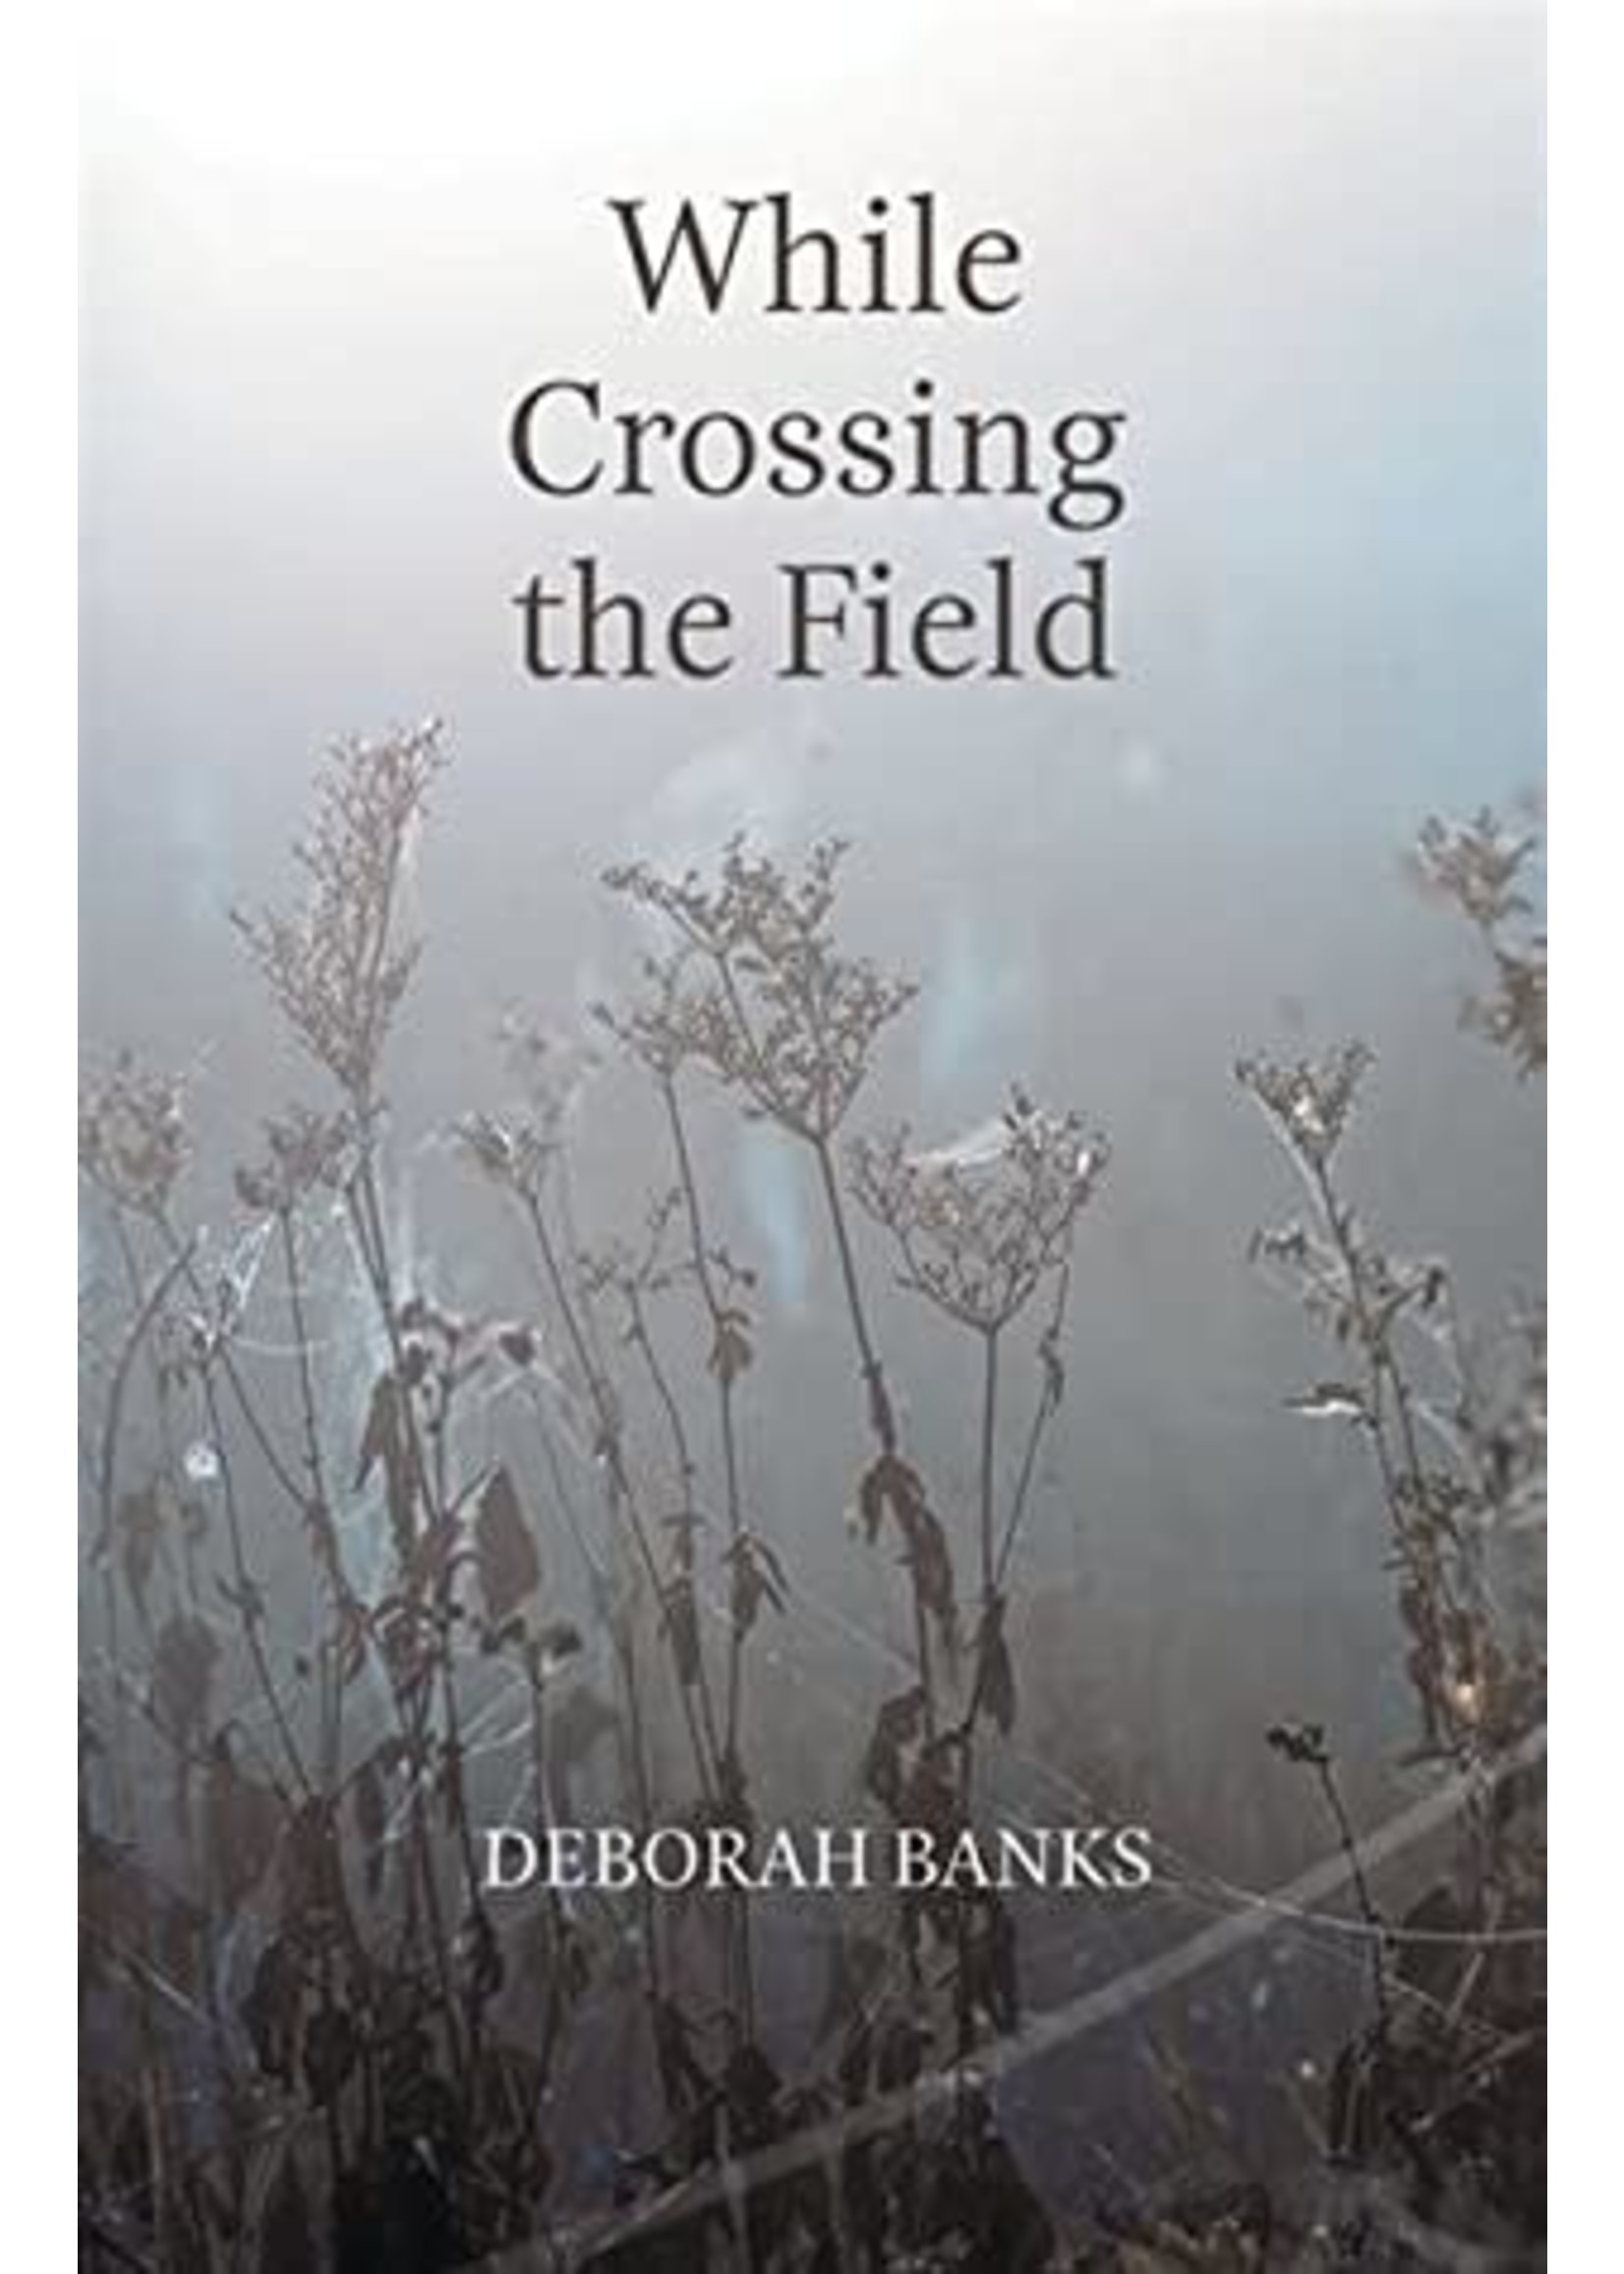 While Crossing the Field by Deborah Banks